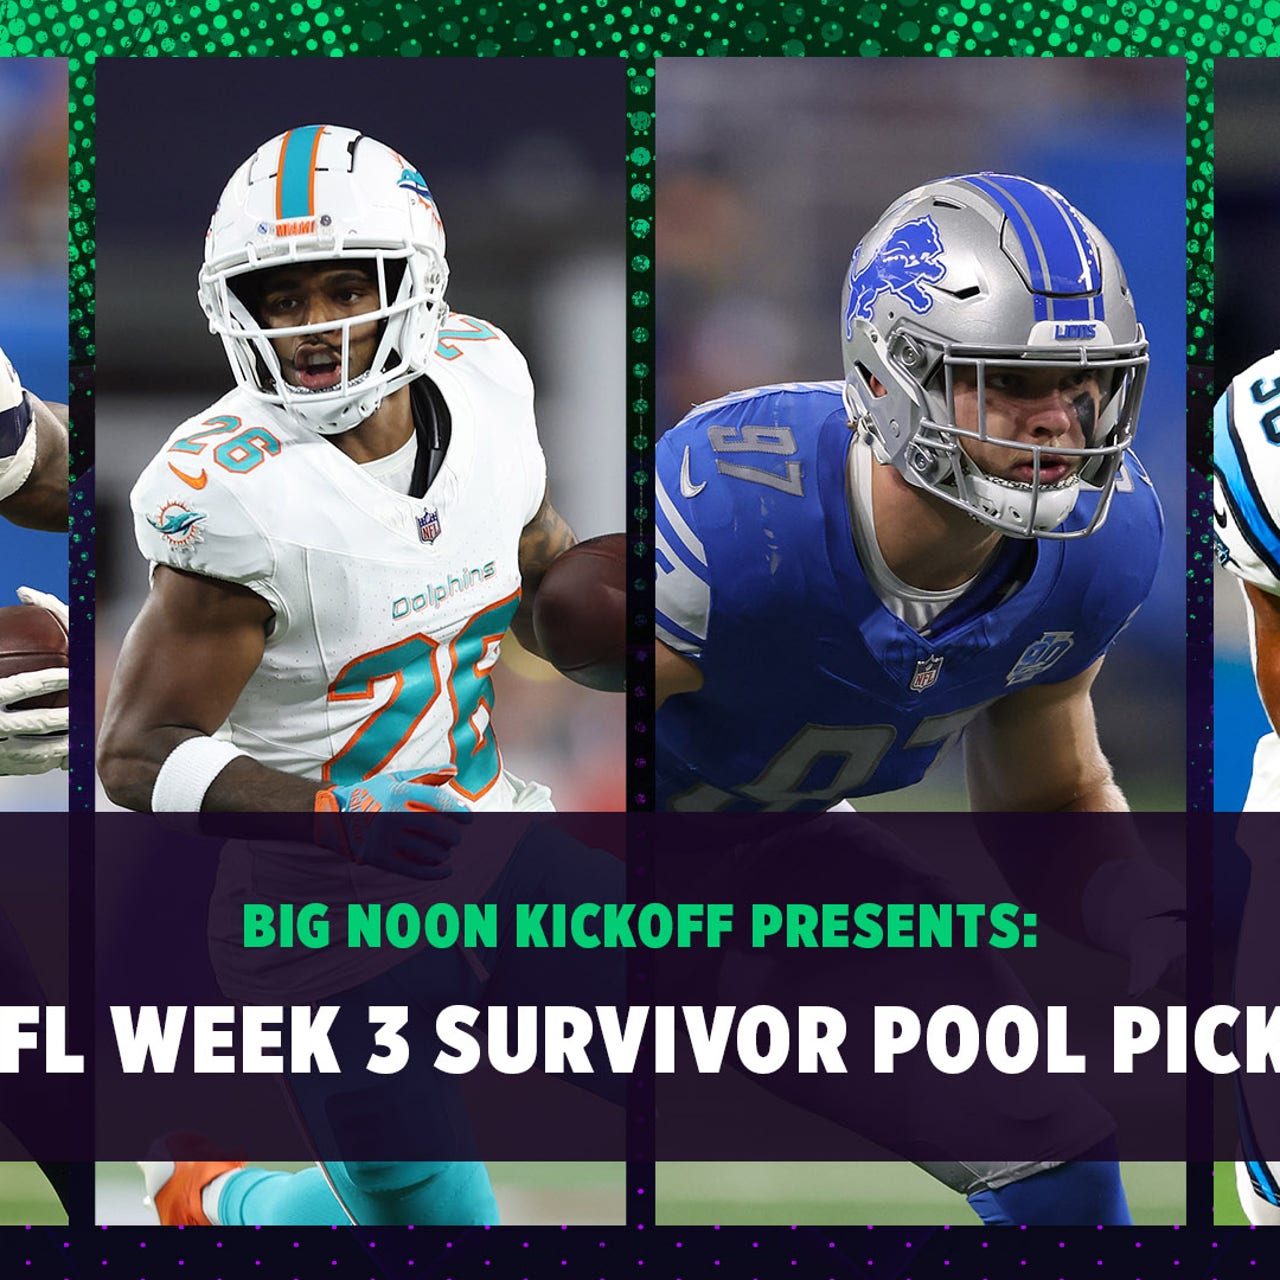 Seahawks, Lions, Dolphins, Panthers make NFL Week 3 Survivor Pool Picks, Bear Bets